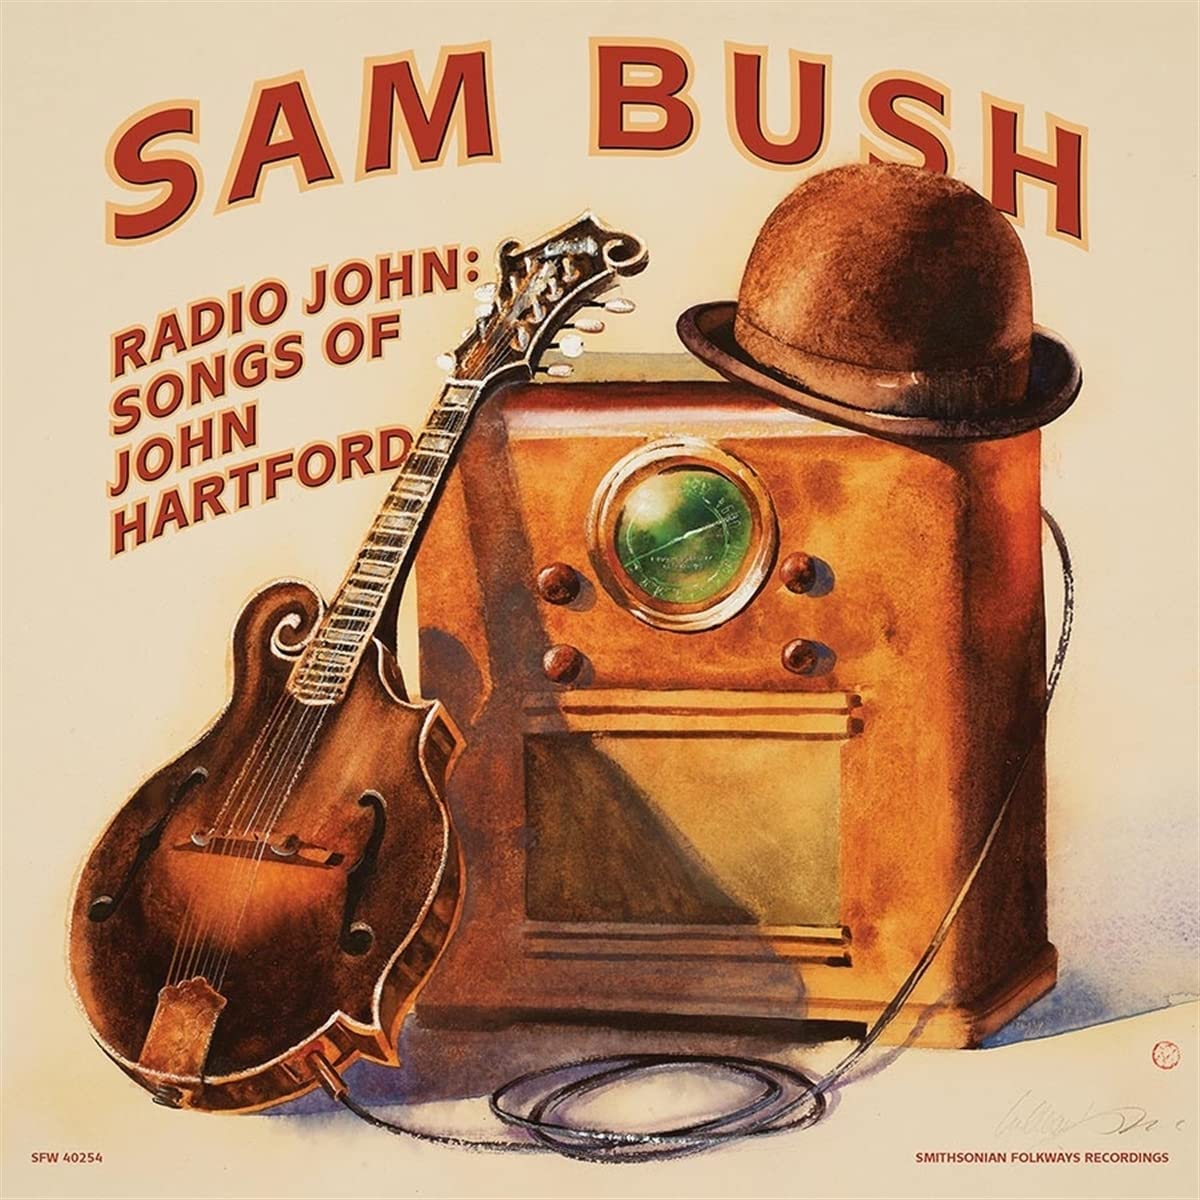 BSAM BUSH – ‘Radio John: Songs of John Hartford’ cover album